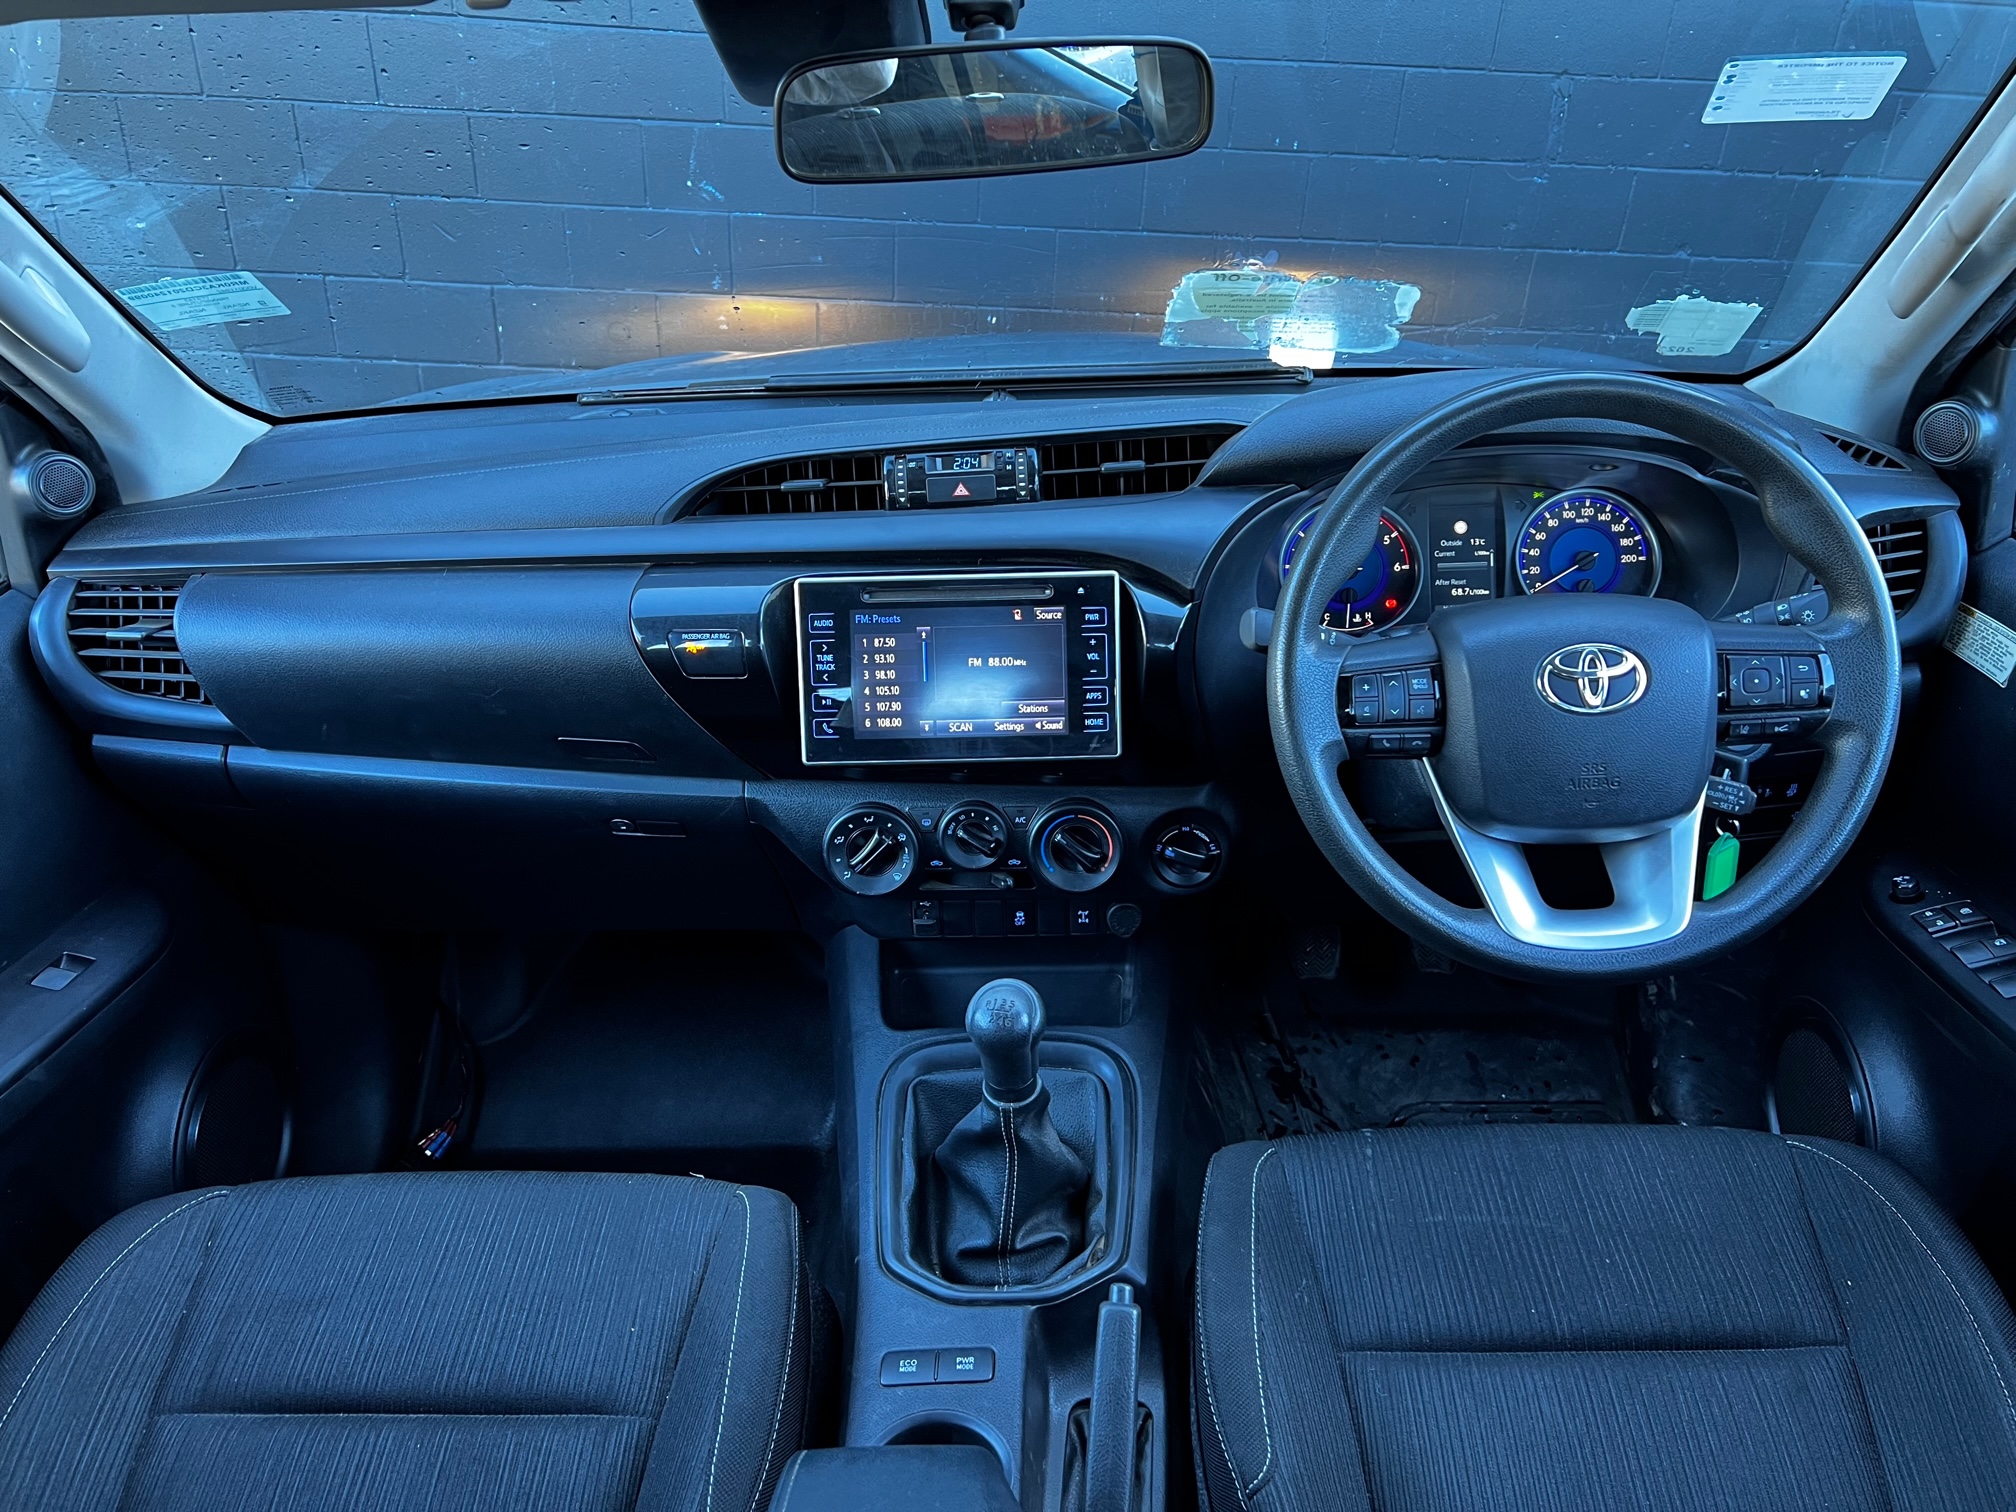 Toyota Hilux SR5 2019 Image 13